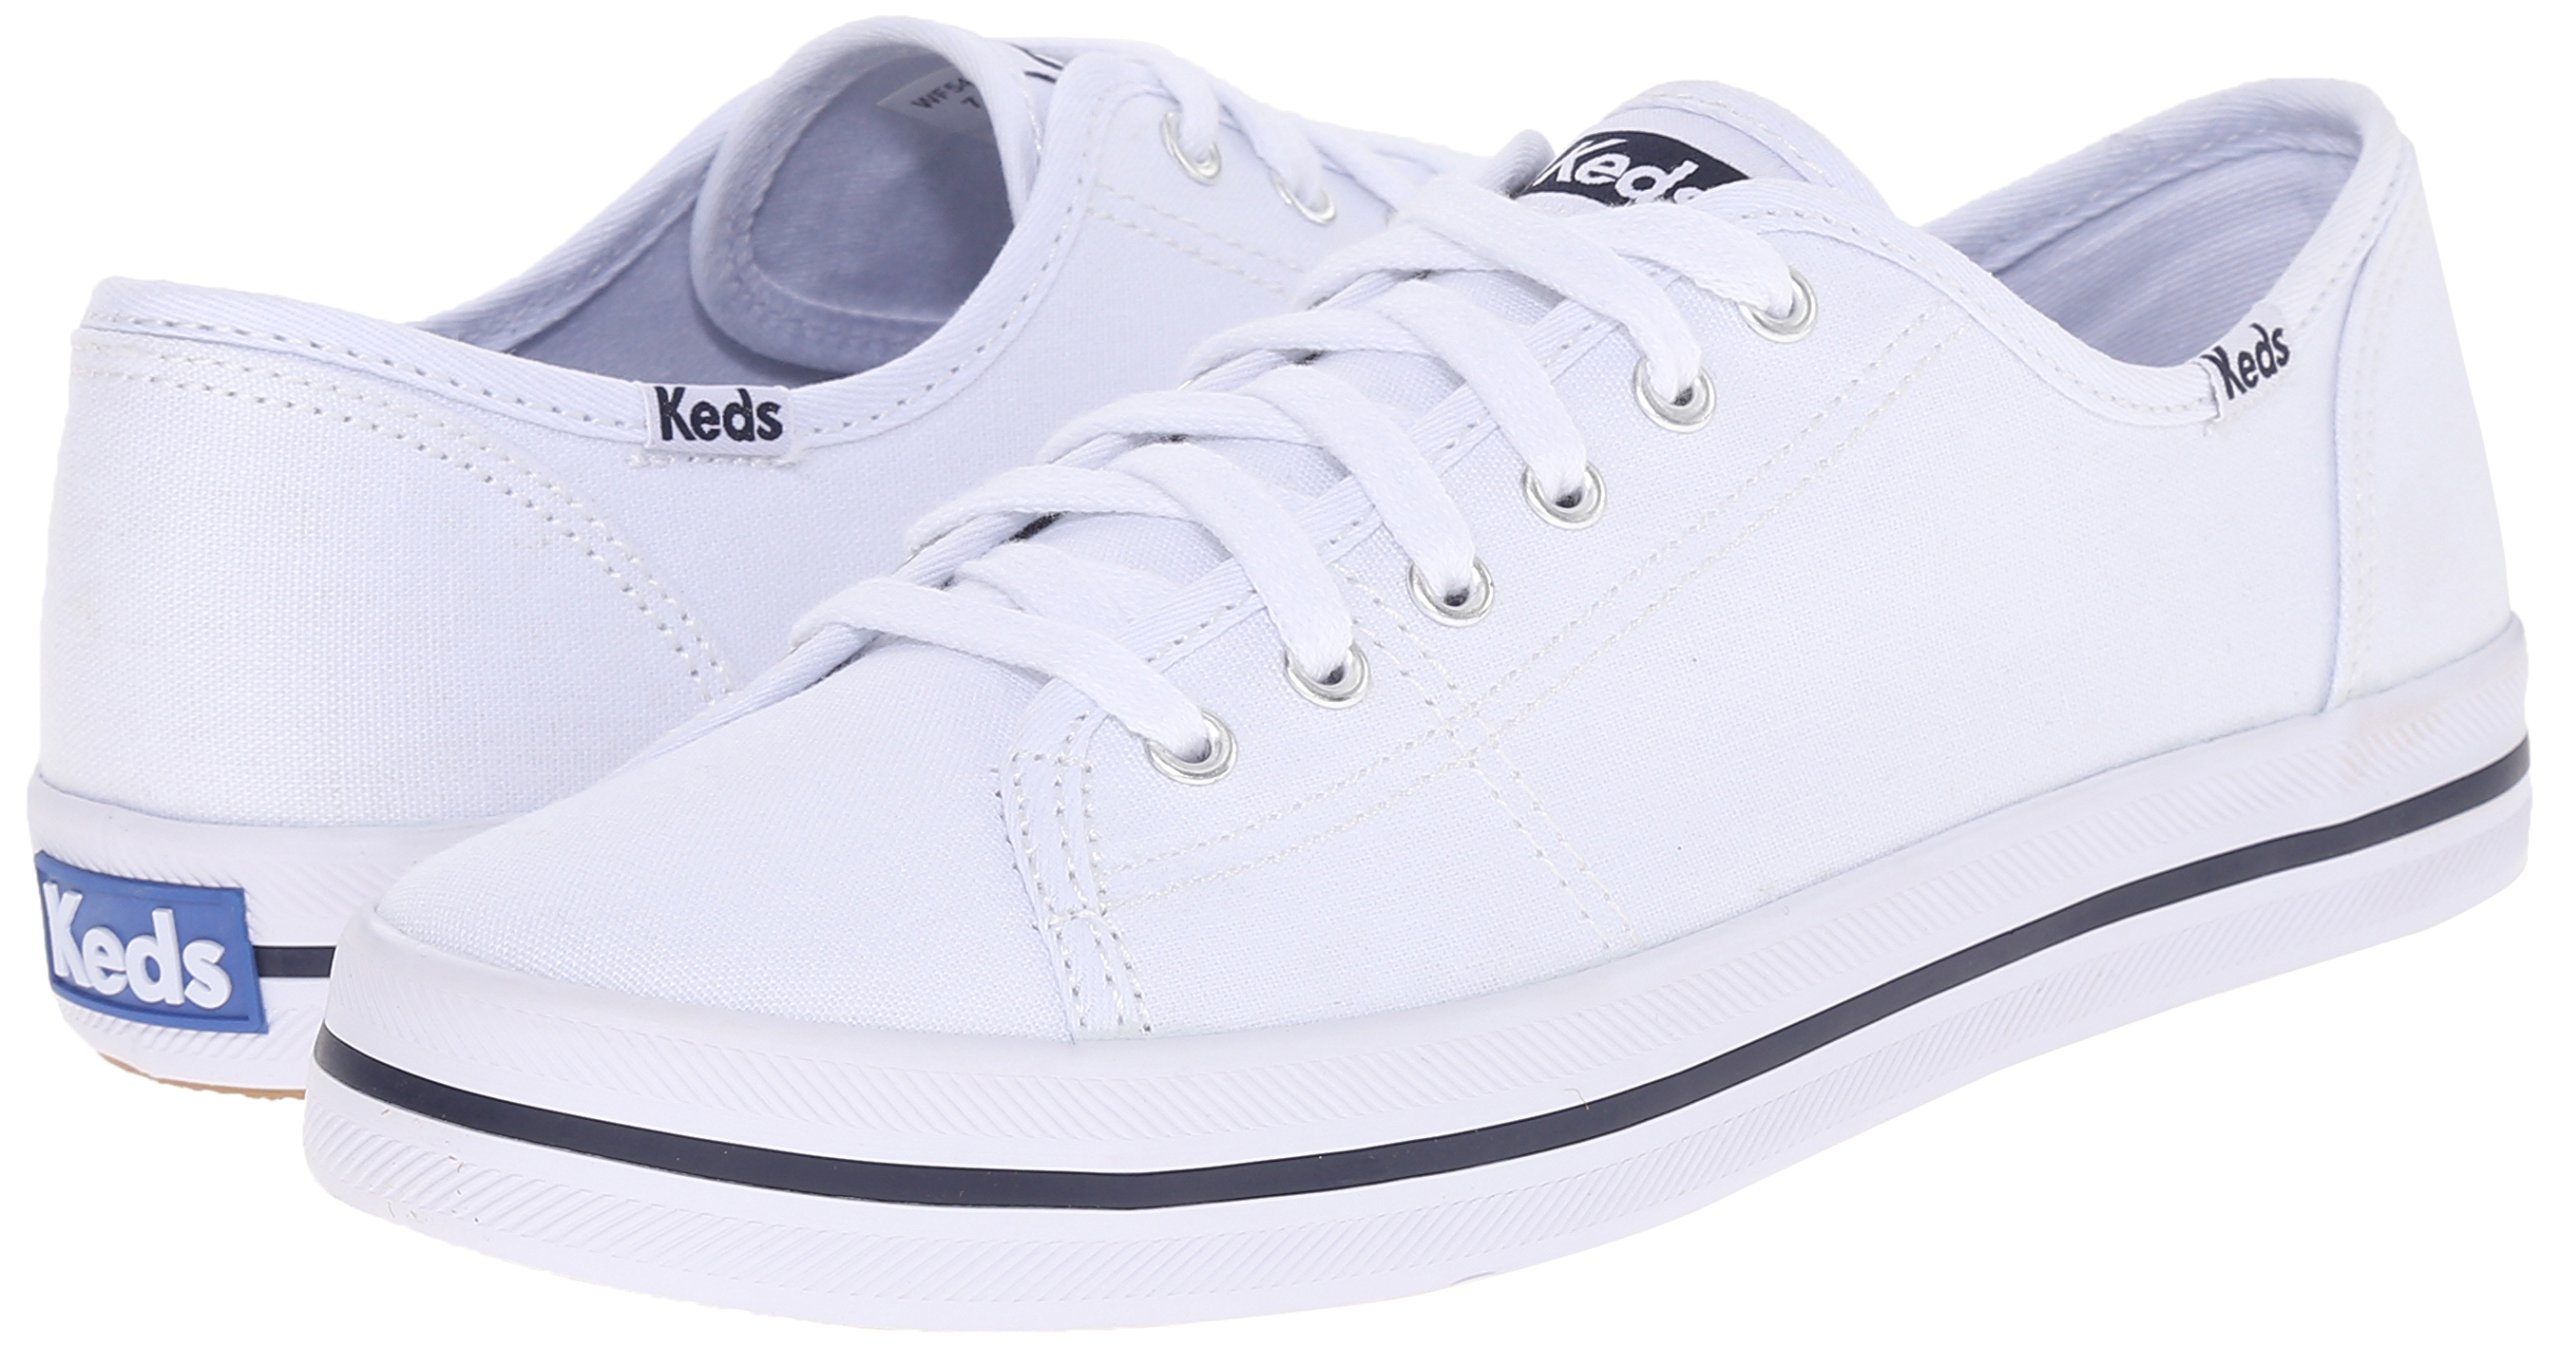 Keds Women’s Kickstart Seasonal Solid CNVS Shoes (White) $20 + Free Shipping w/ Prime or on $25+